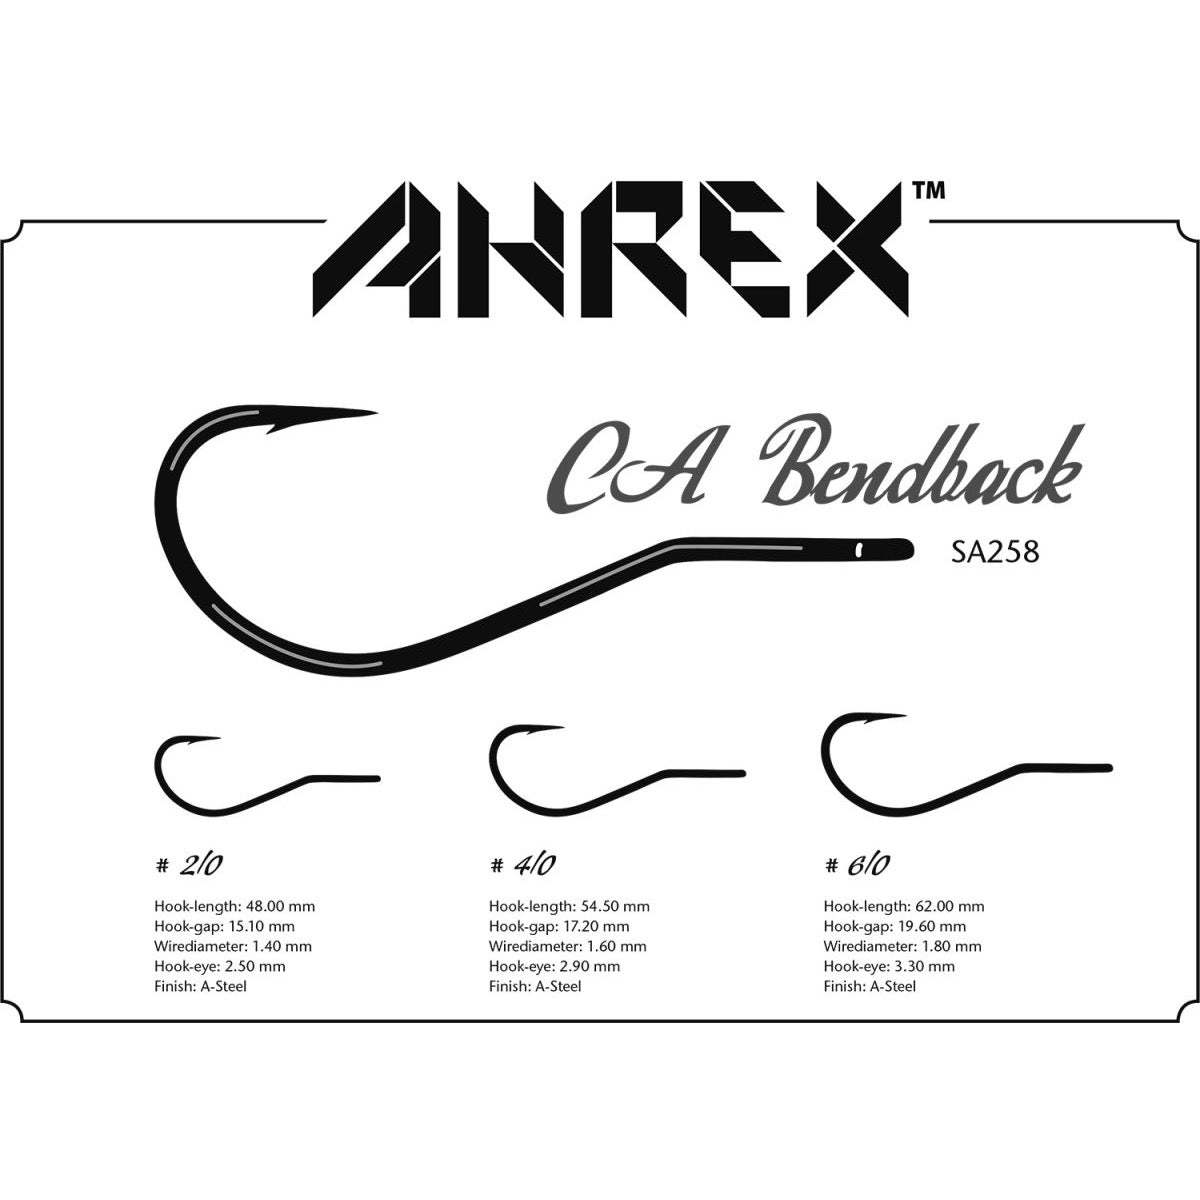 Ahrex SA258 – CA Bendback